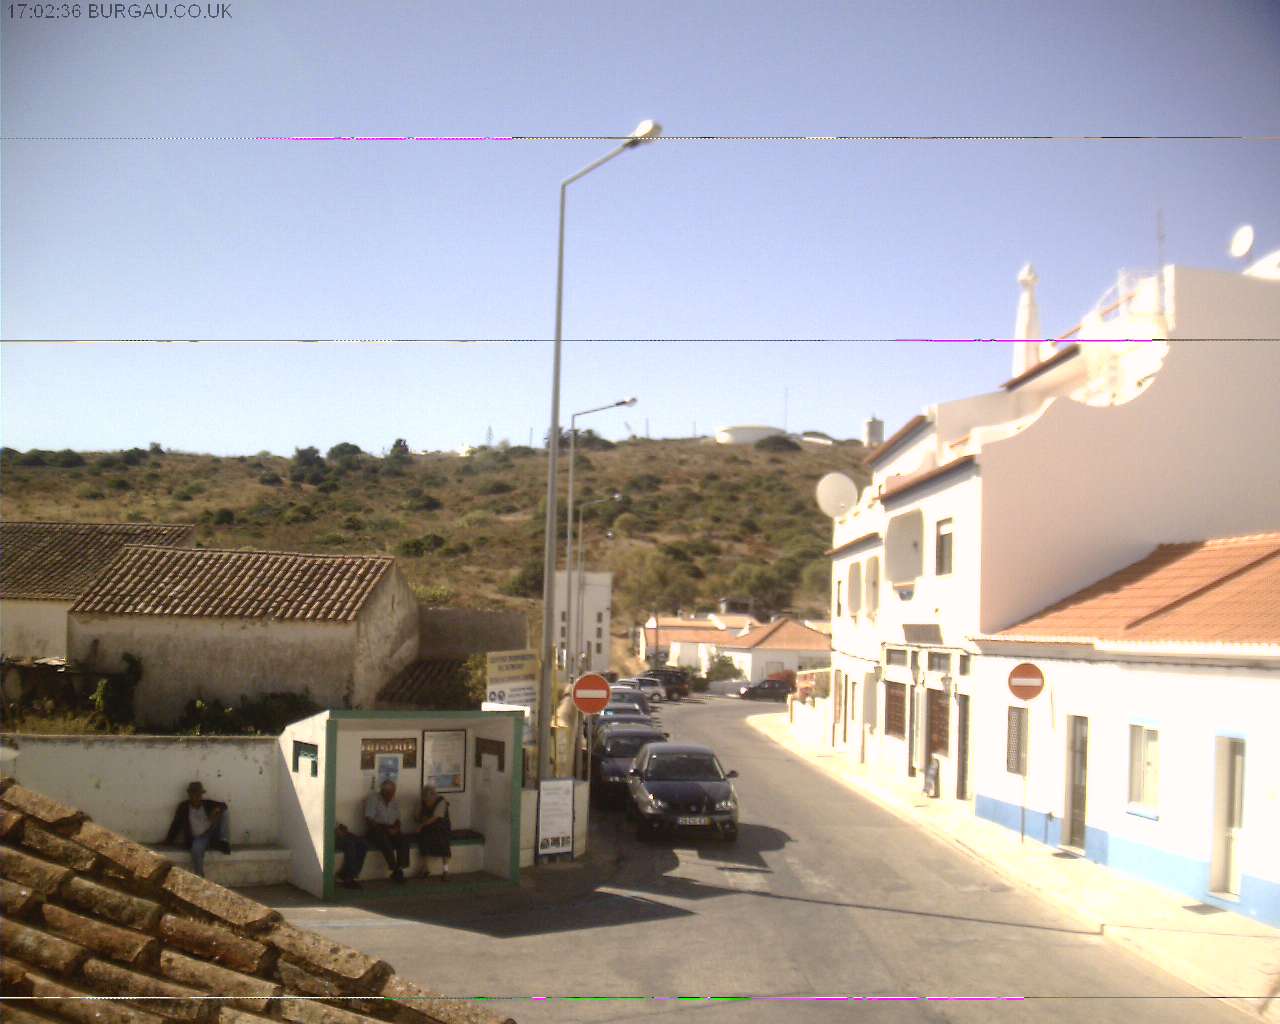 Portugal’s Algarve – A Bus Stop